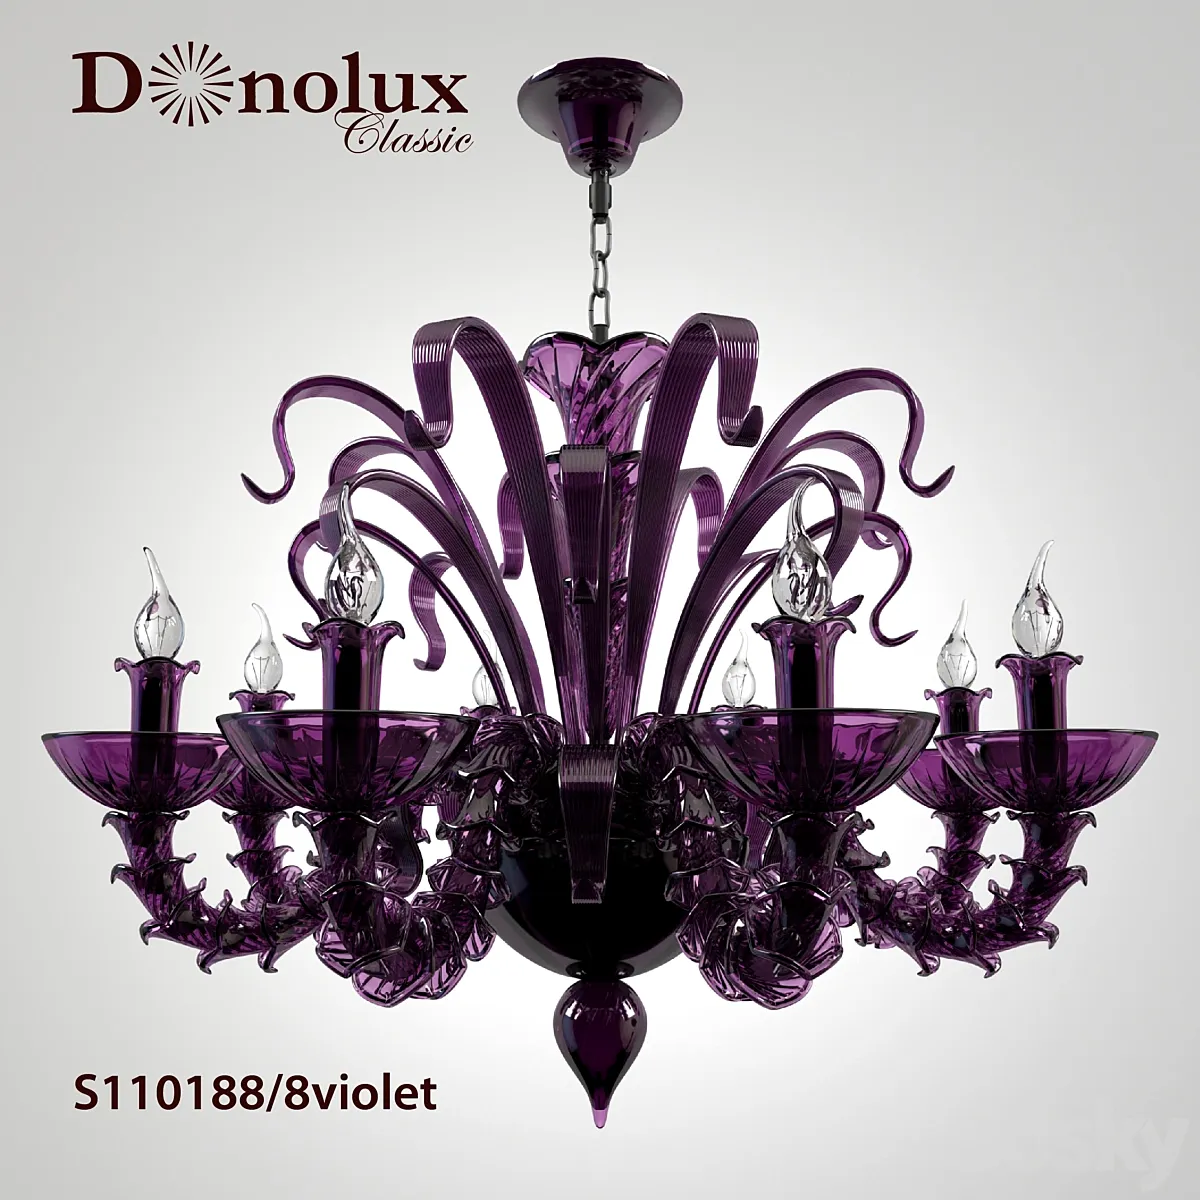 Chandelier Donolux S110188 8violet